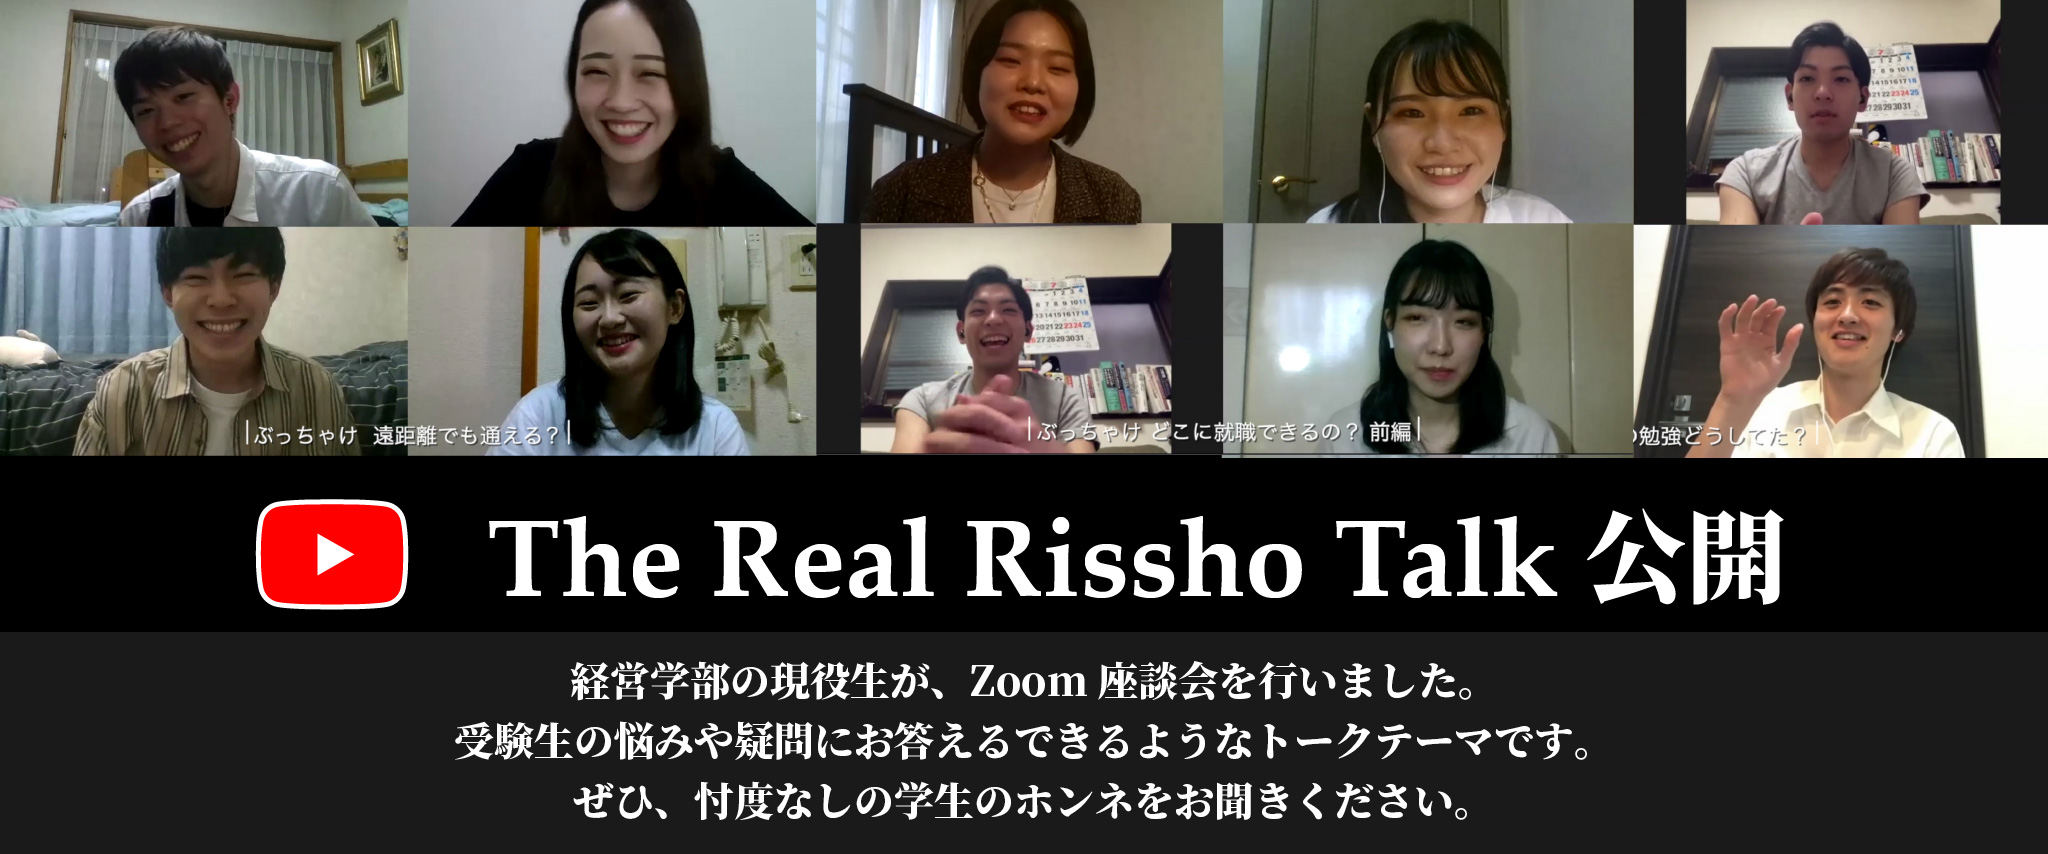 The Real Rissho Talk 公開 経営学部の現役生が、Zoom座談会を行いました。
受験生の悩みや疑問にお答えるできるようなトークテーマです。<br>
ぜひ、忖度なしの学生のホンネをお聞きください。